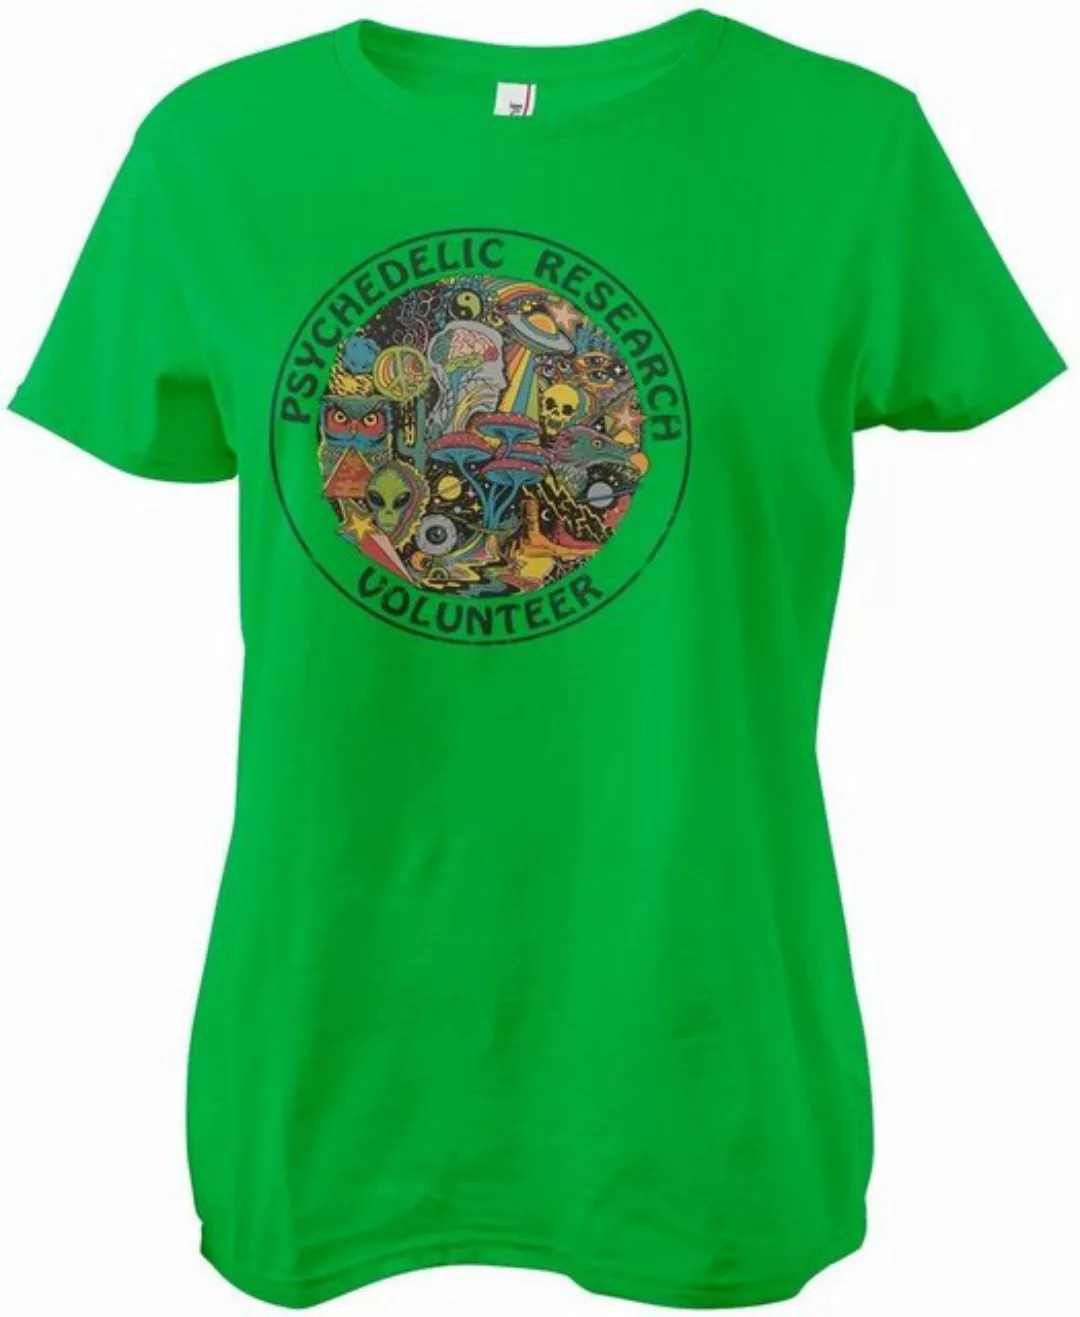 Steven Rhodes T-Shirt Psychedelic Research Volunteer Girly Tee günstig online kaufen